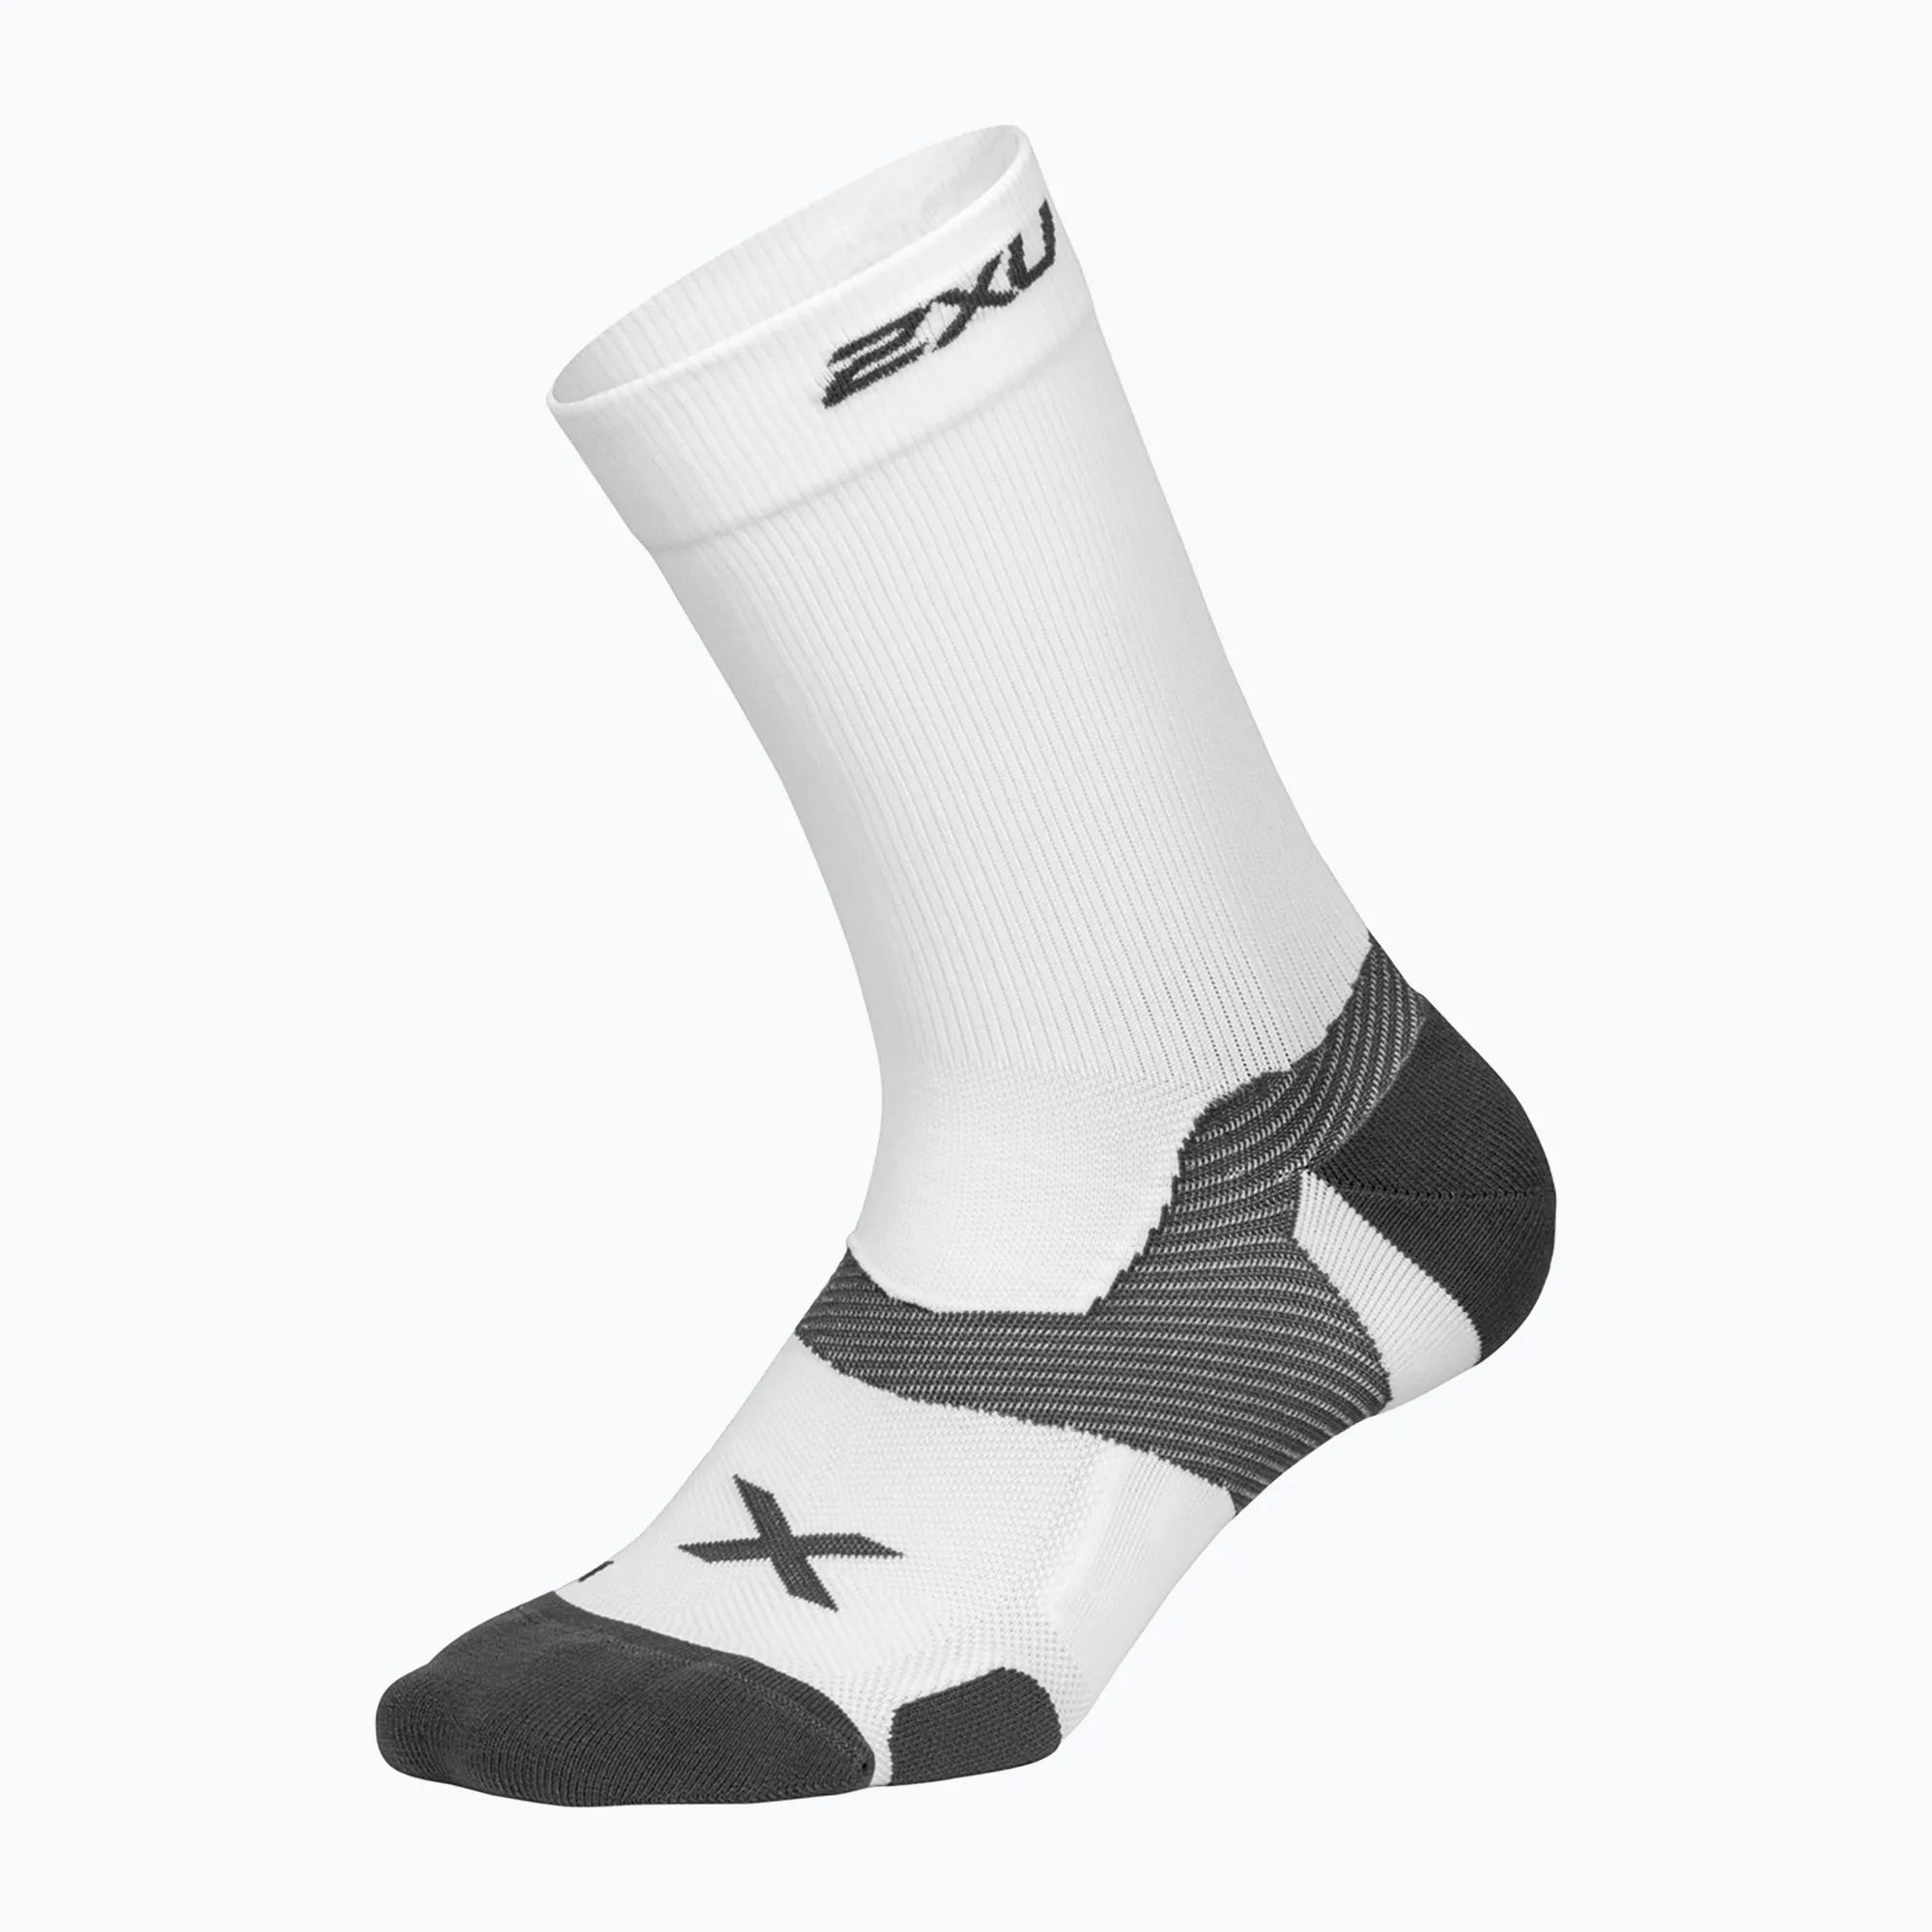 2XU VECTR Cushion Crew Socks, White/Grey